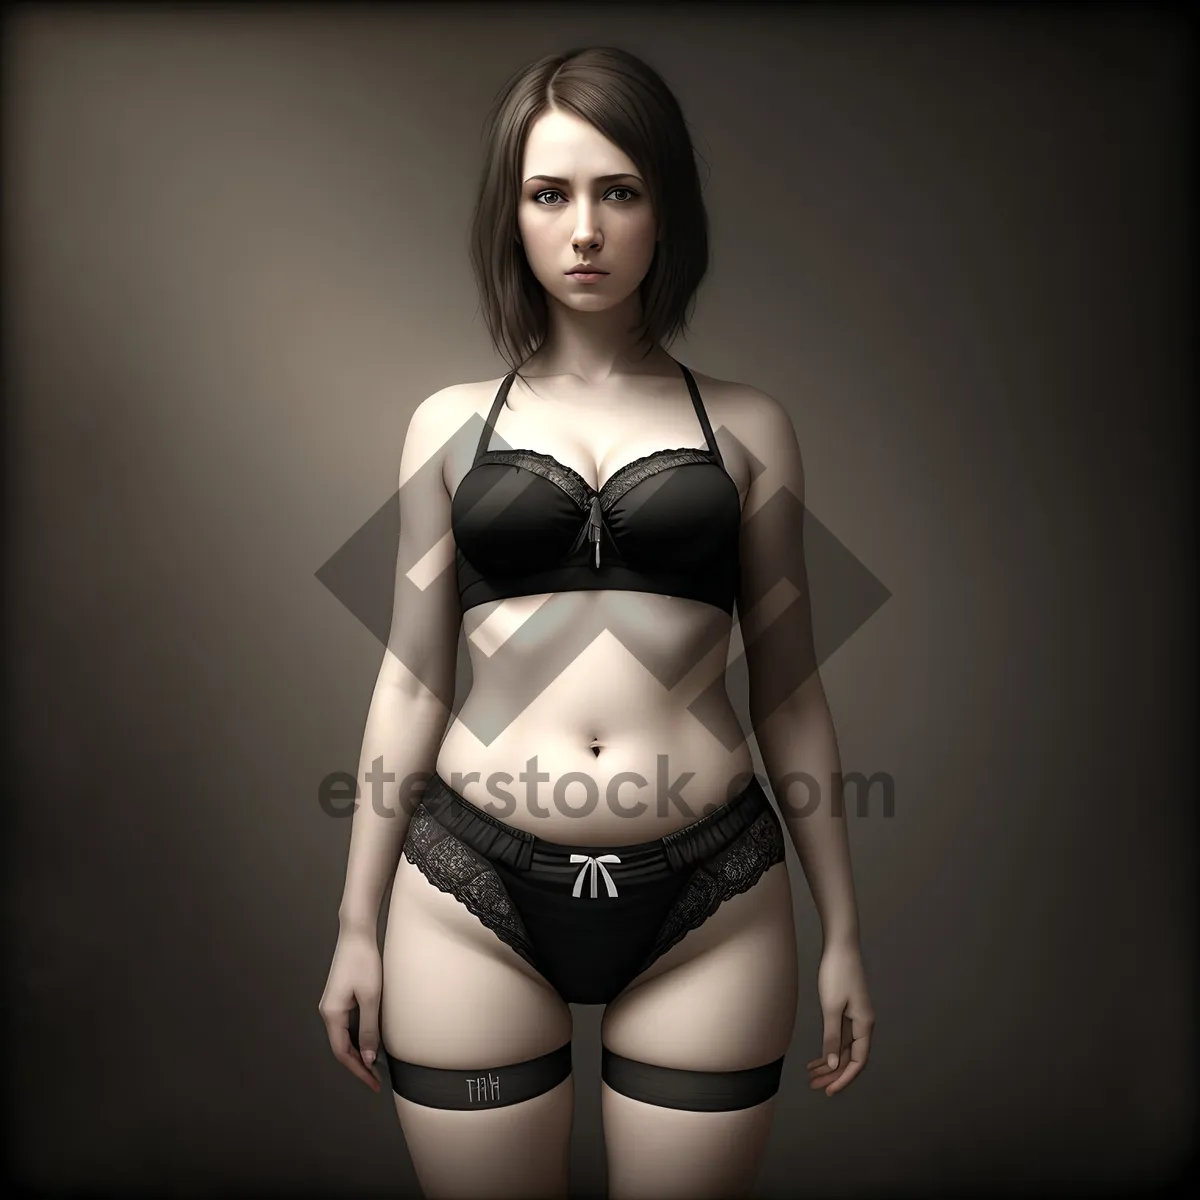 Picture of Sexy Lingerie Model Posing in Black Bikini